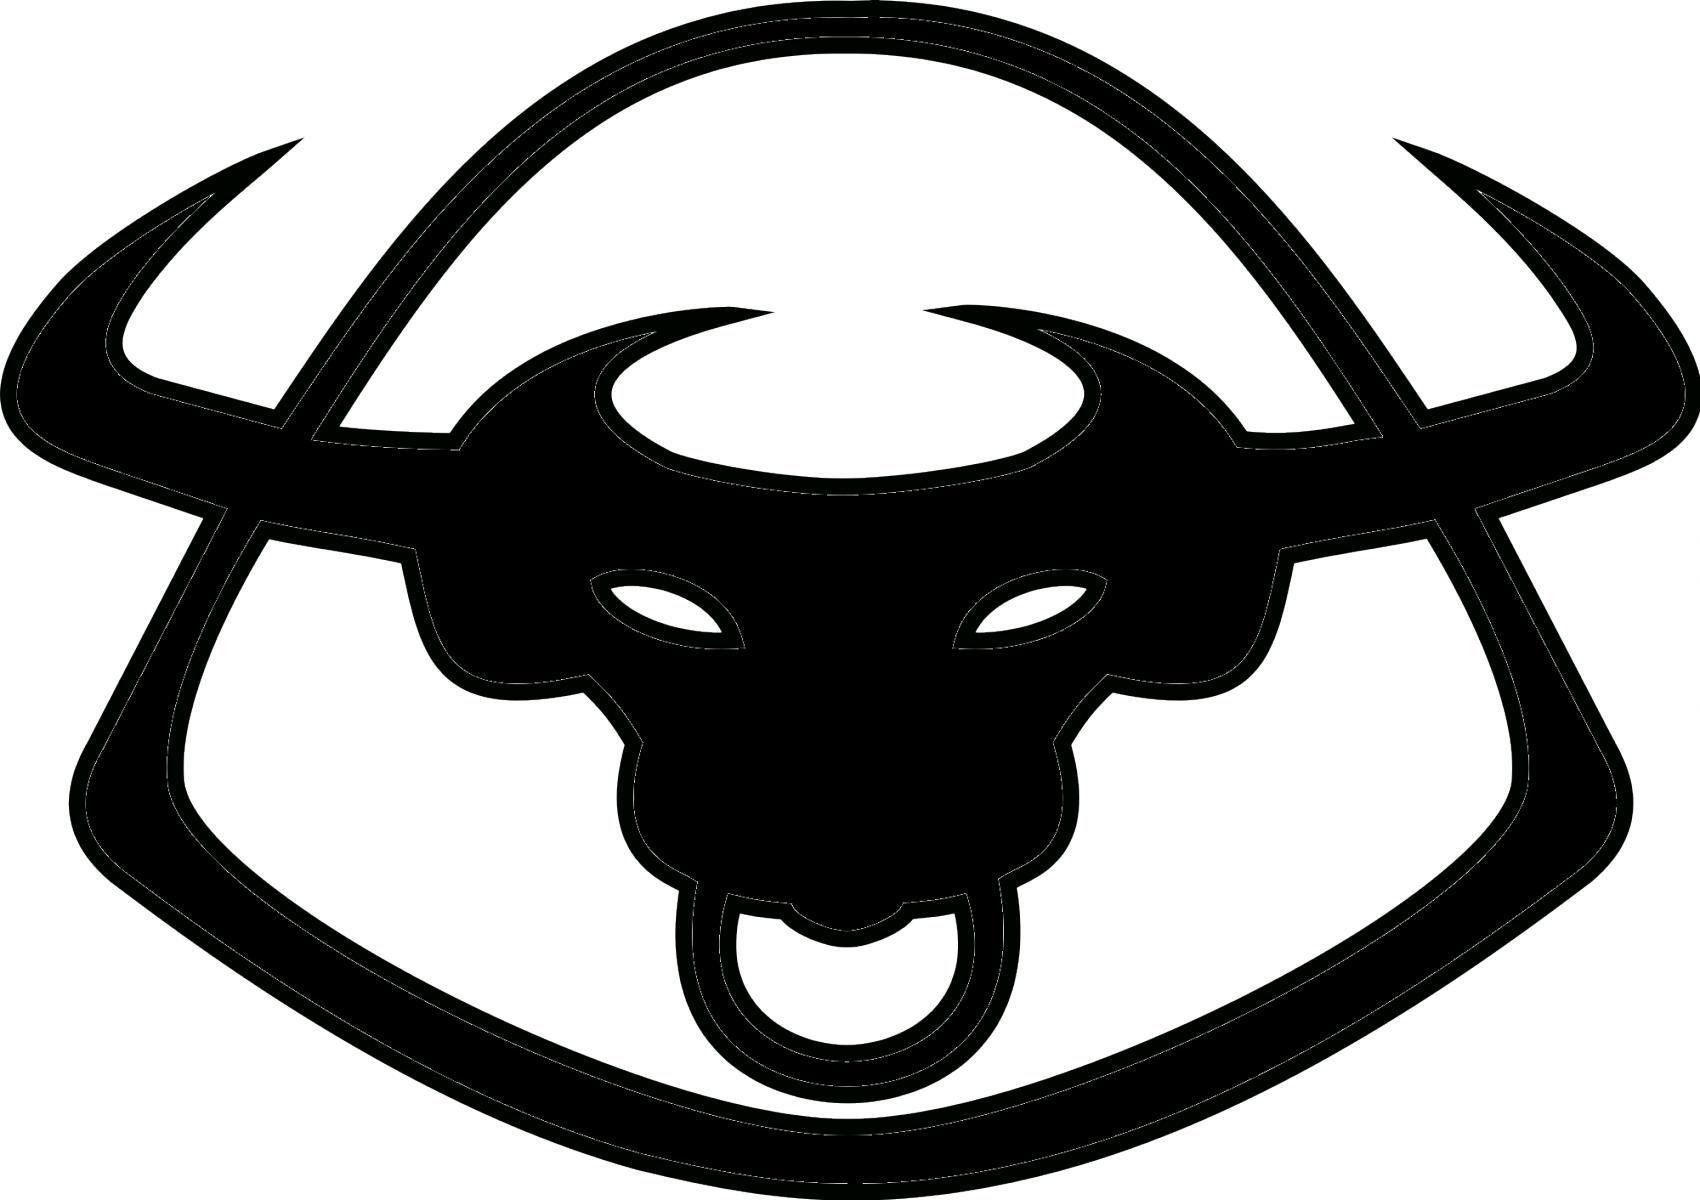 TCCA Logo - Anyone have a TCCA bull logo - Taurus Car Club of America : Ford ...